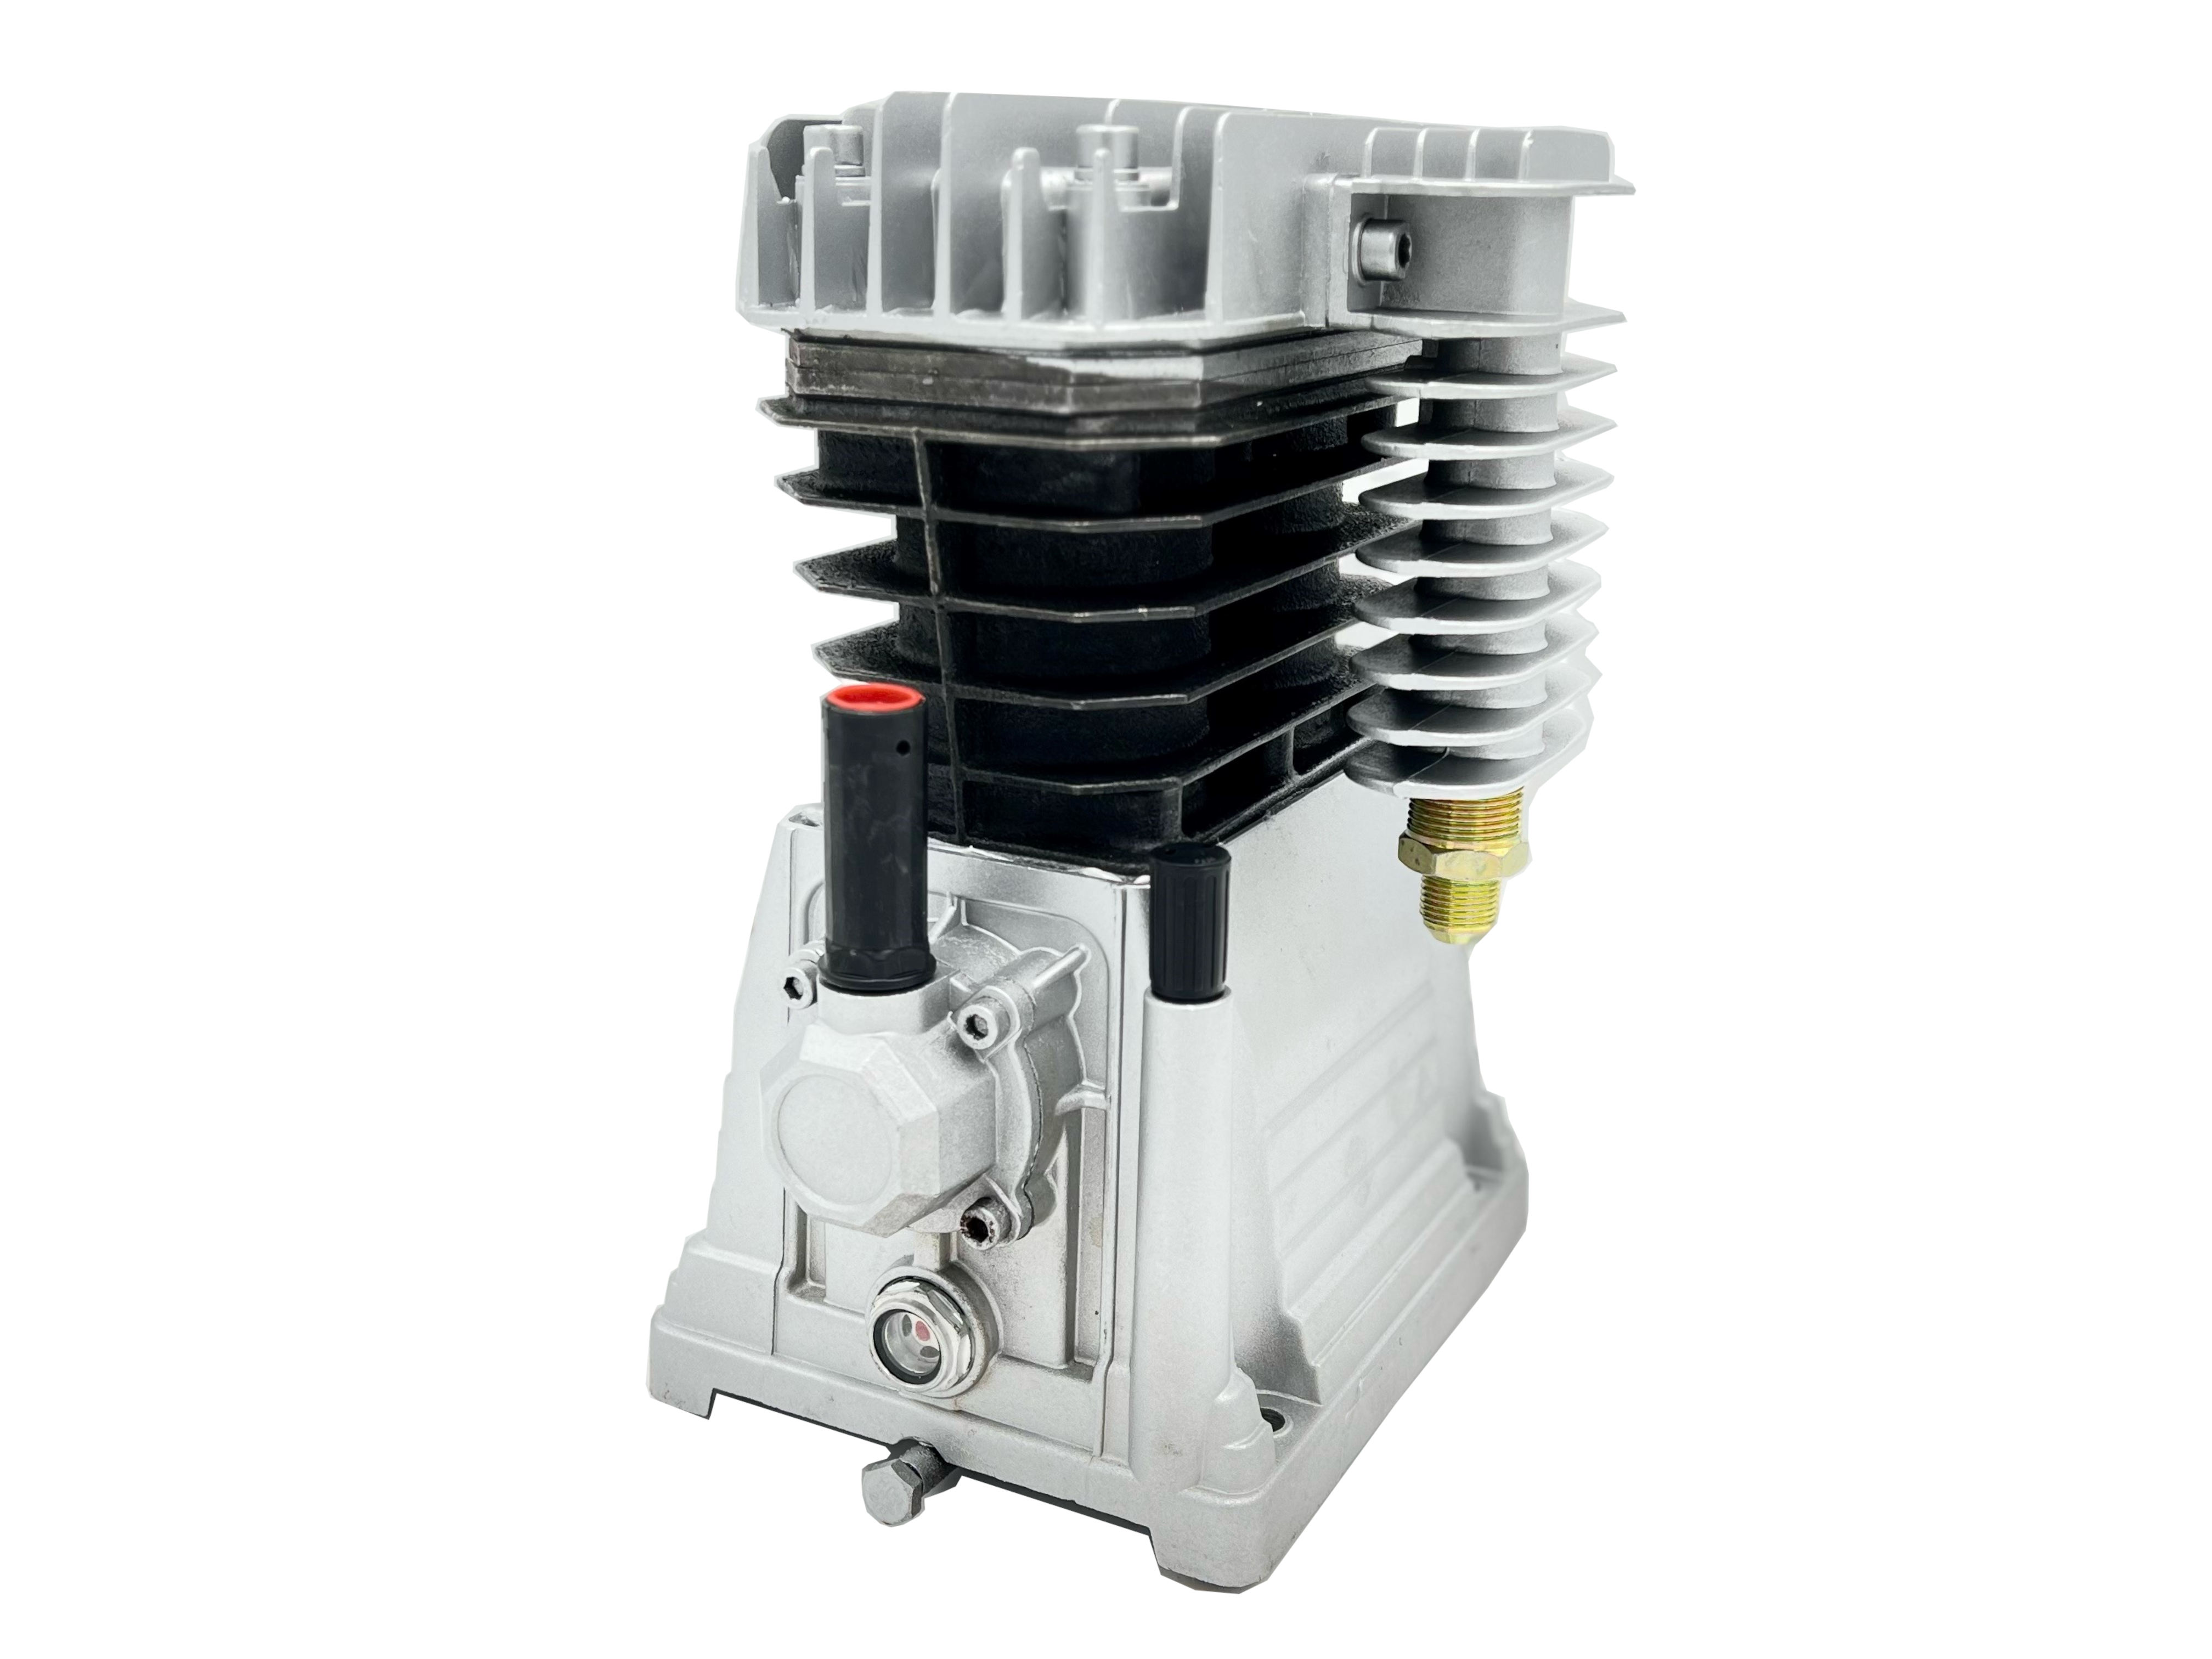 4 PS Ersatz-Motor für RT4100 Kolben-Kompressor